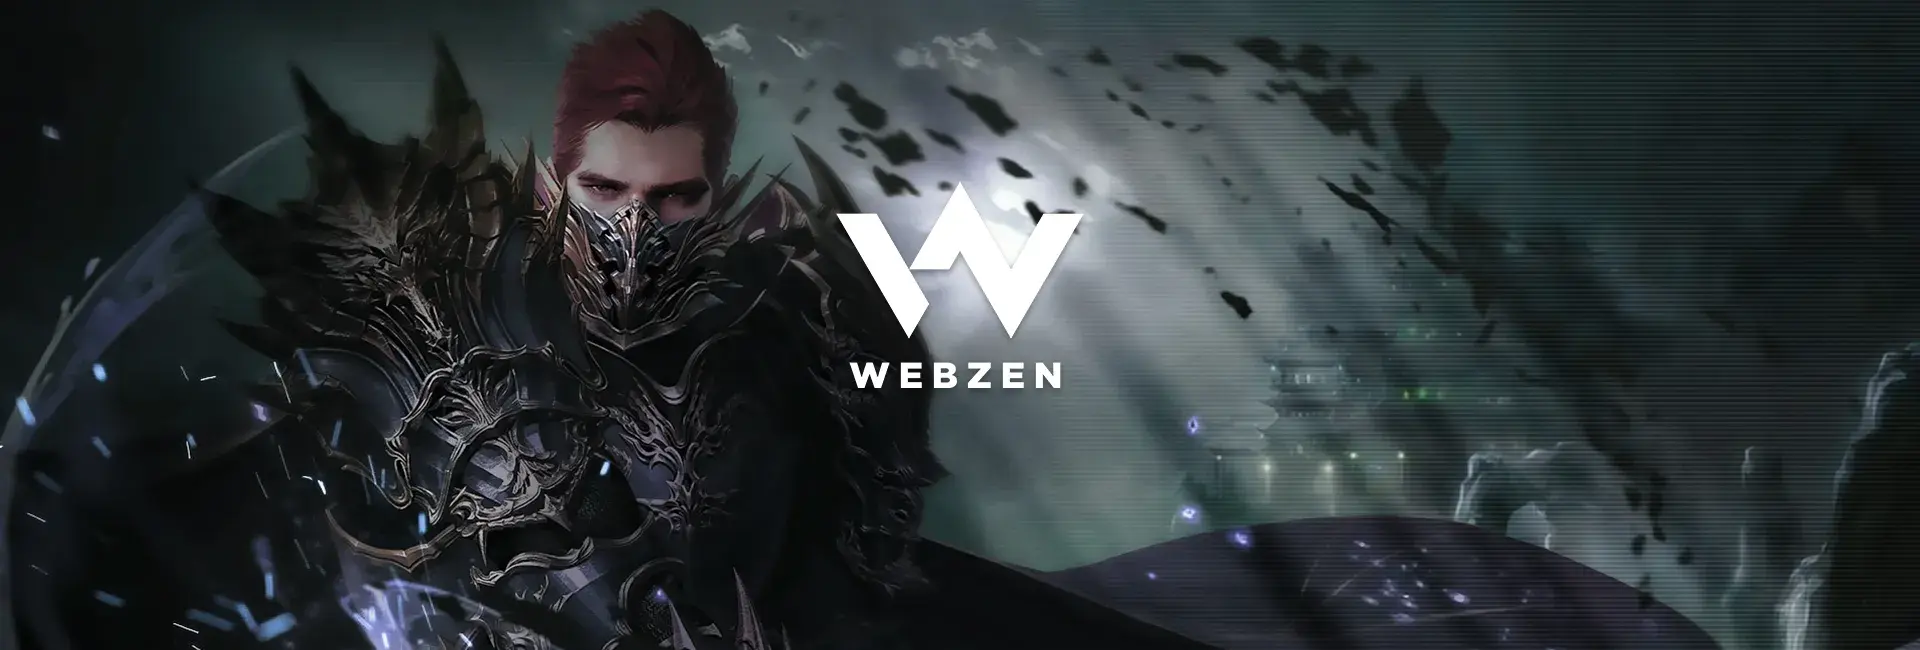 Webzen 5000 Wcoin